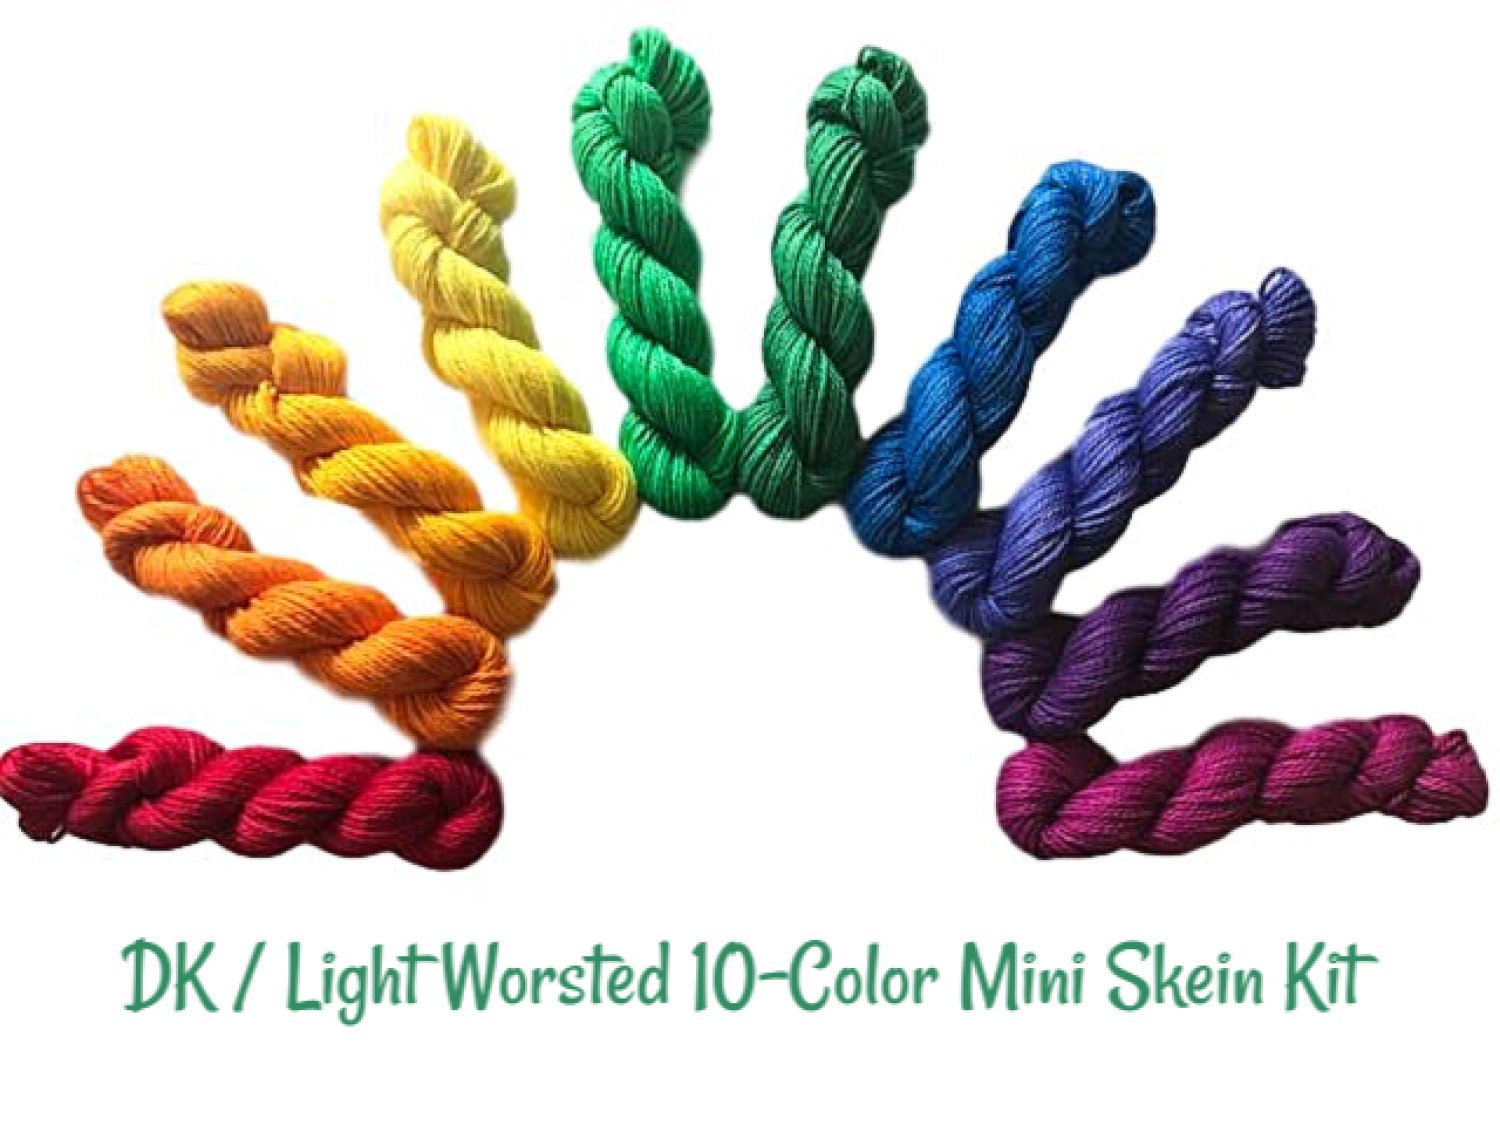 Vegan Yarn Kit - Hand Dyed Rainbow Fiber Set - DK / Light Worsted Bamboo Cotton Semi Solids - (10) 53 yd skeins - 3 Ply Artisan Baby Yarn